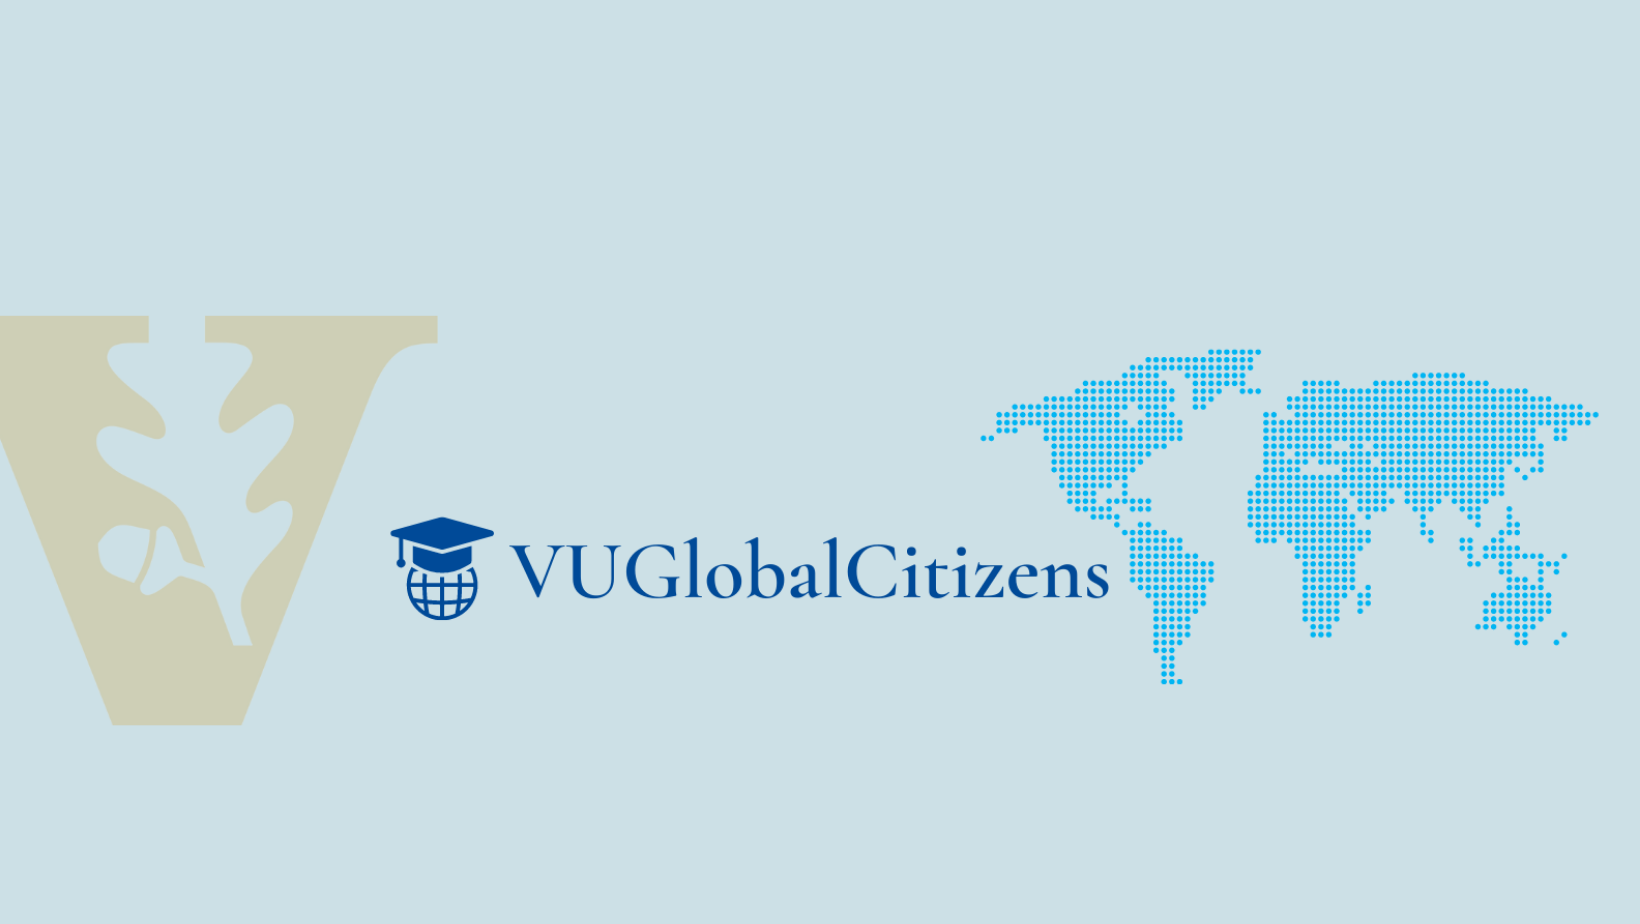 New Identity Initiative: VUGlobalCitizens